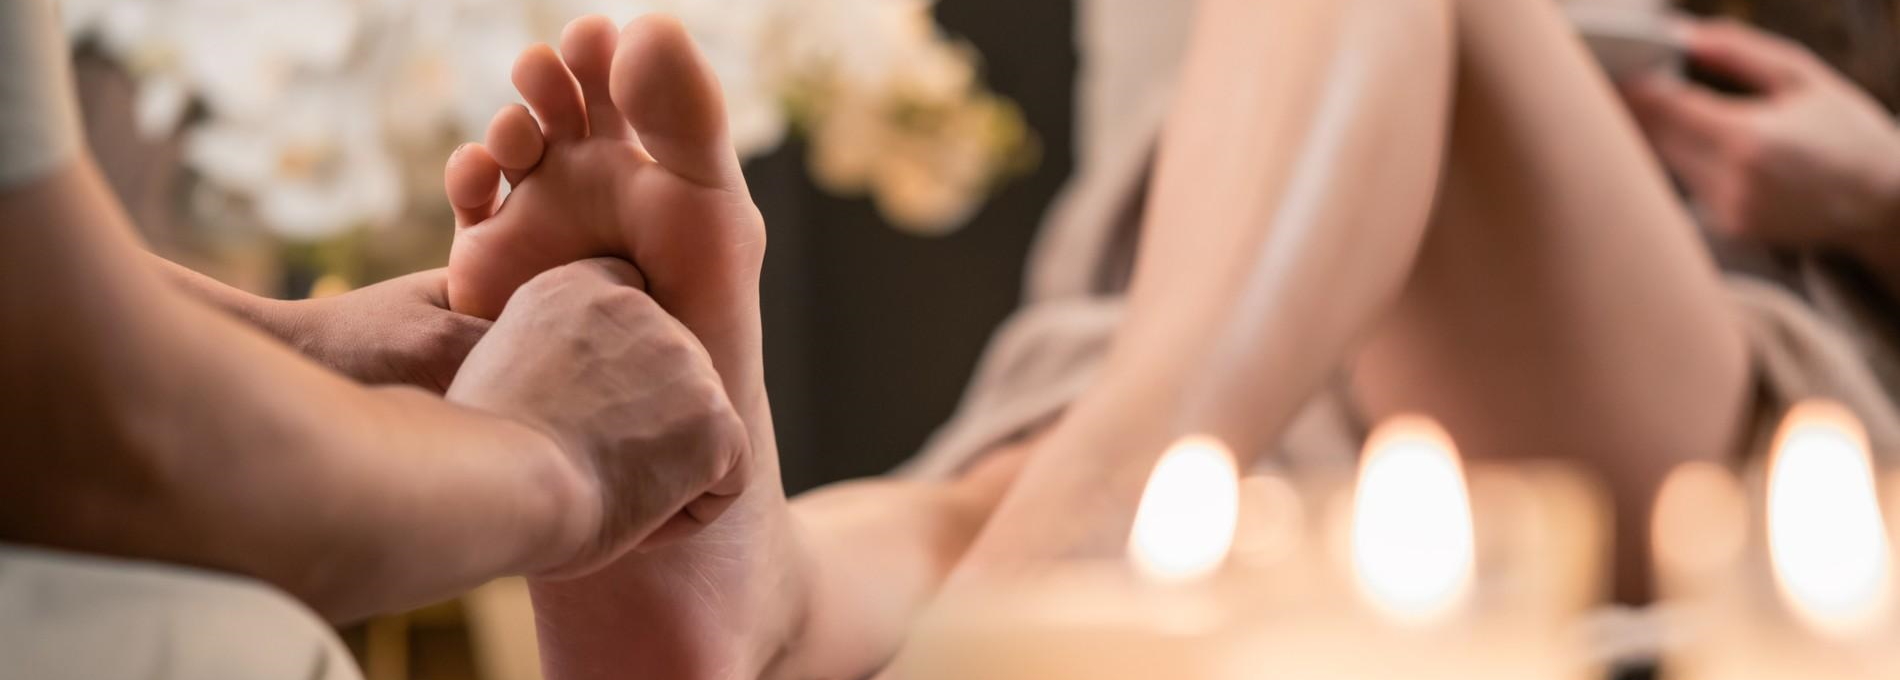 Woman having reflexology foot massage in wellness spa